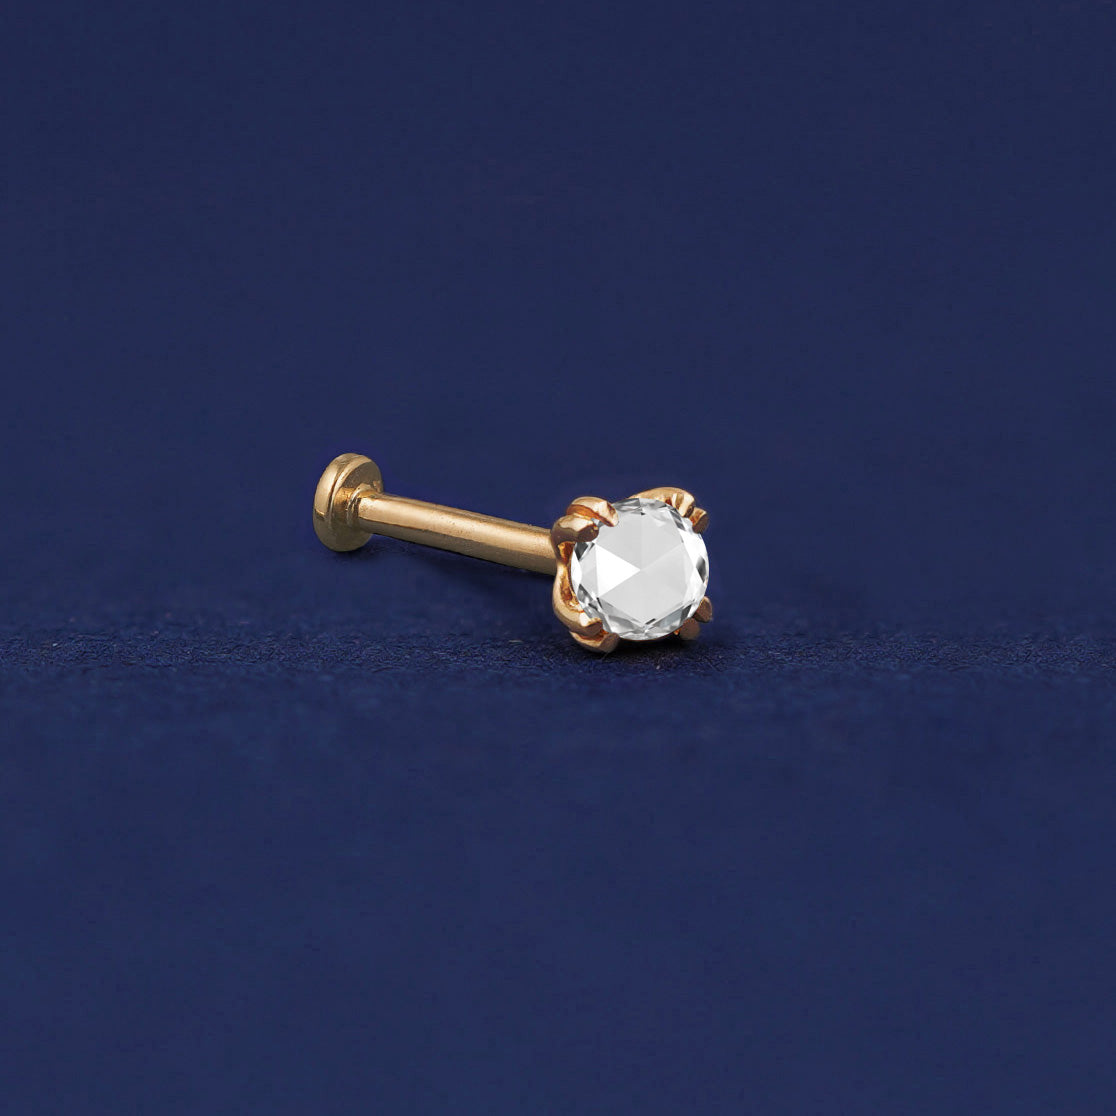 A 14 karat solid gold Rose Cut Diamond Flat Back Earring on a dark blue background